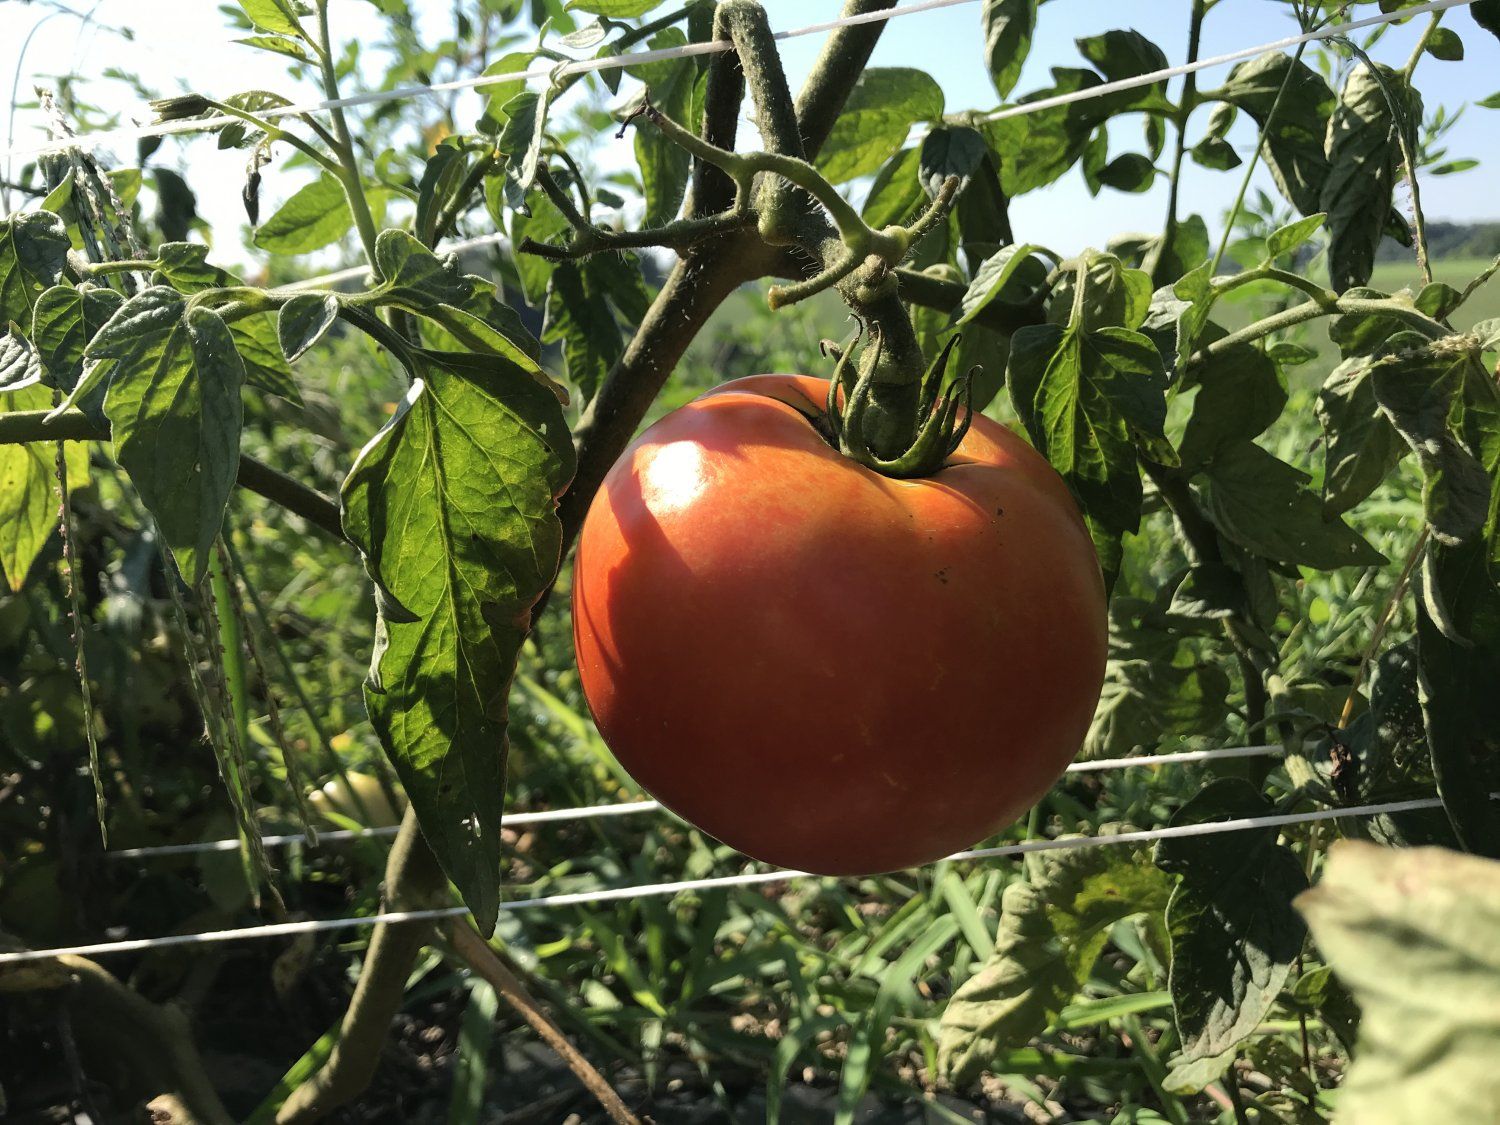 Previous Happening: Tomatoes and Corn say Summer